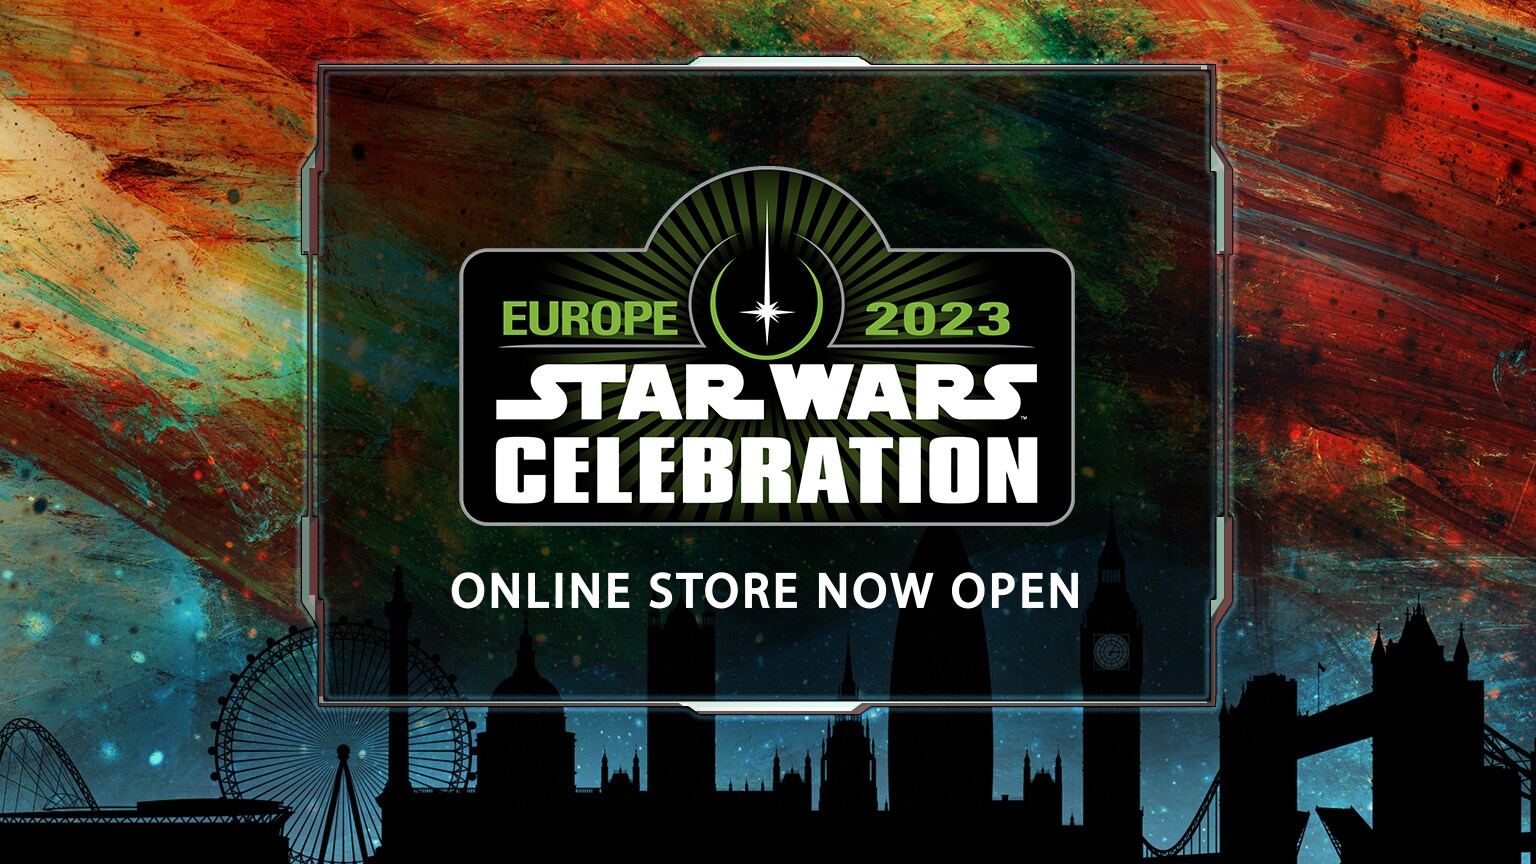 Star Wars Celebration Europe 2023 Online Store Now Open